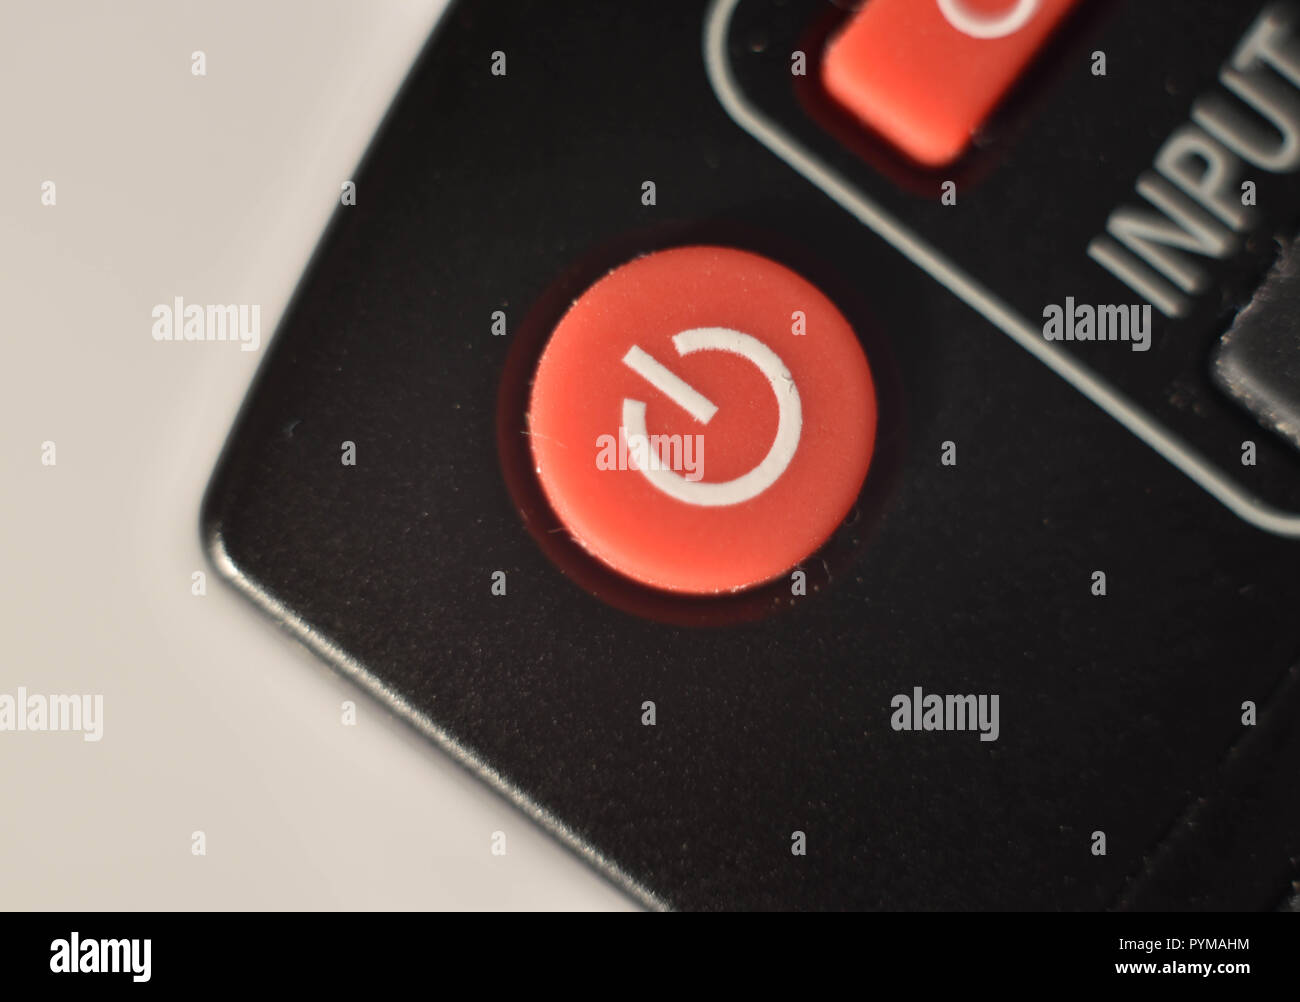 remote control stop button Stock Photo